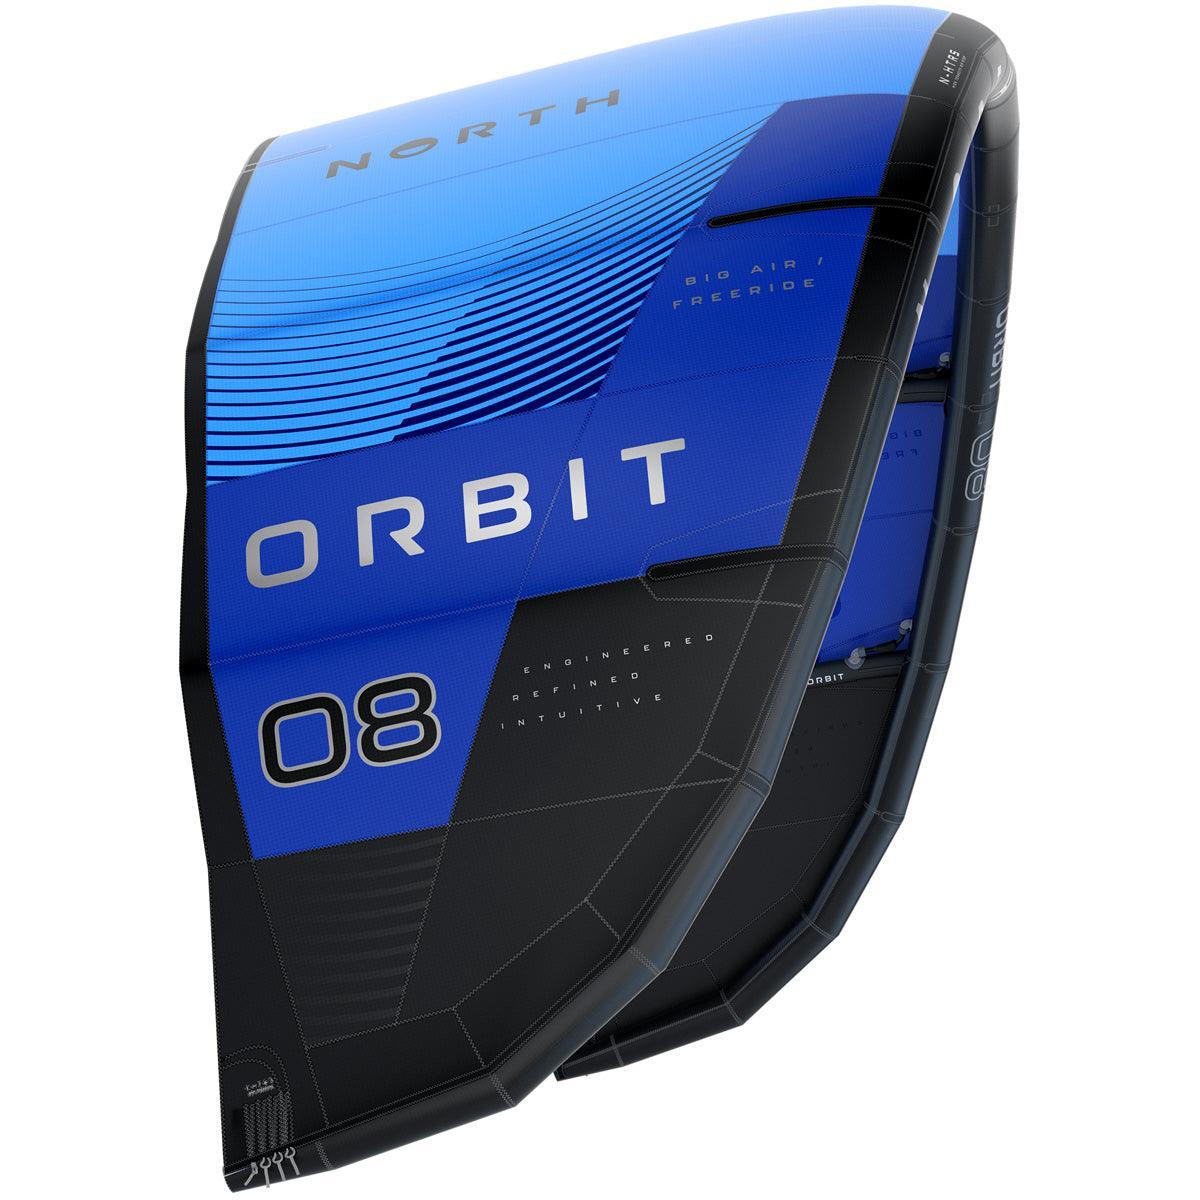 North Orbit - Powerkiteshop